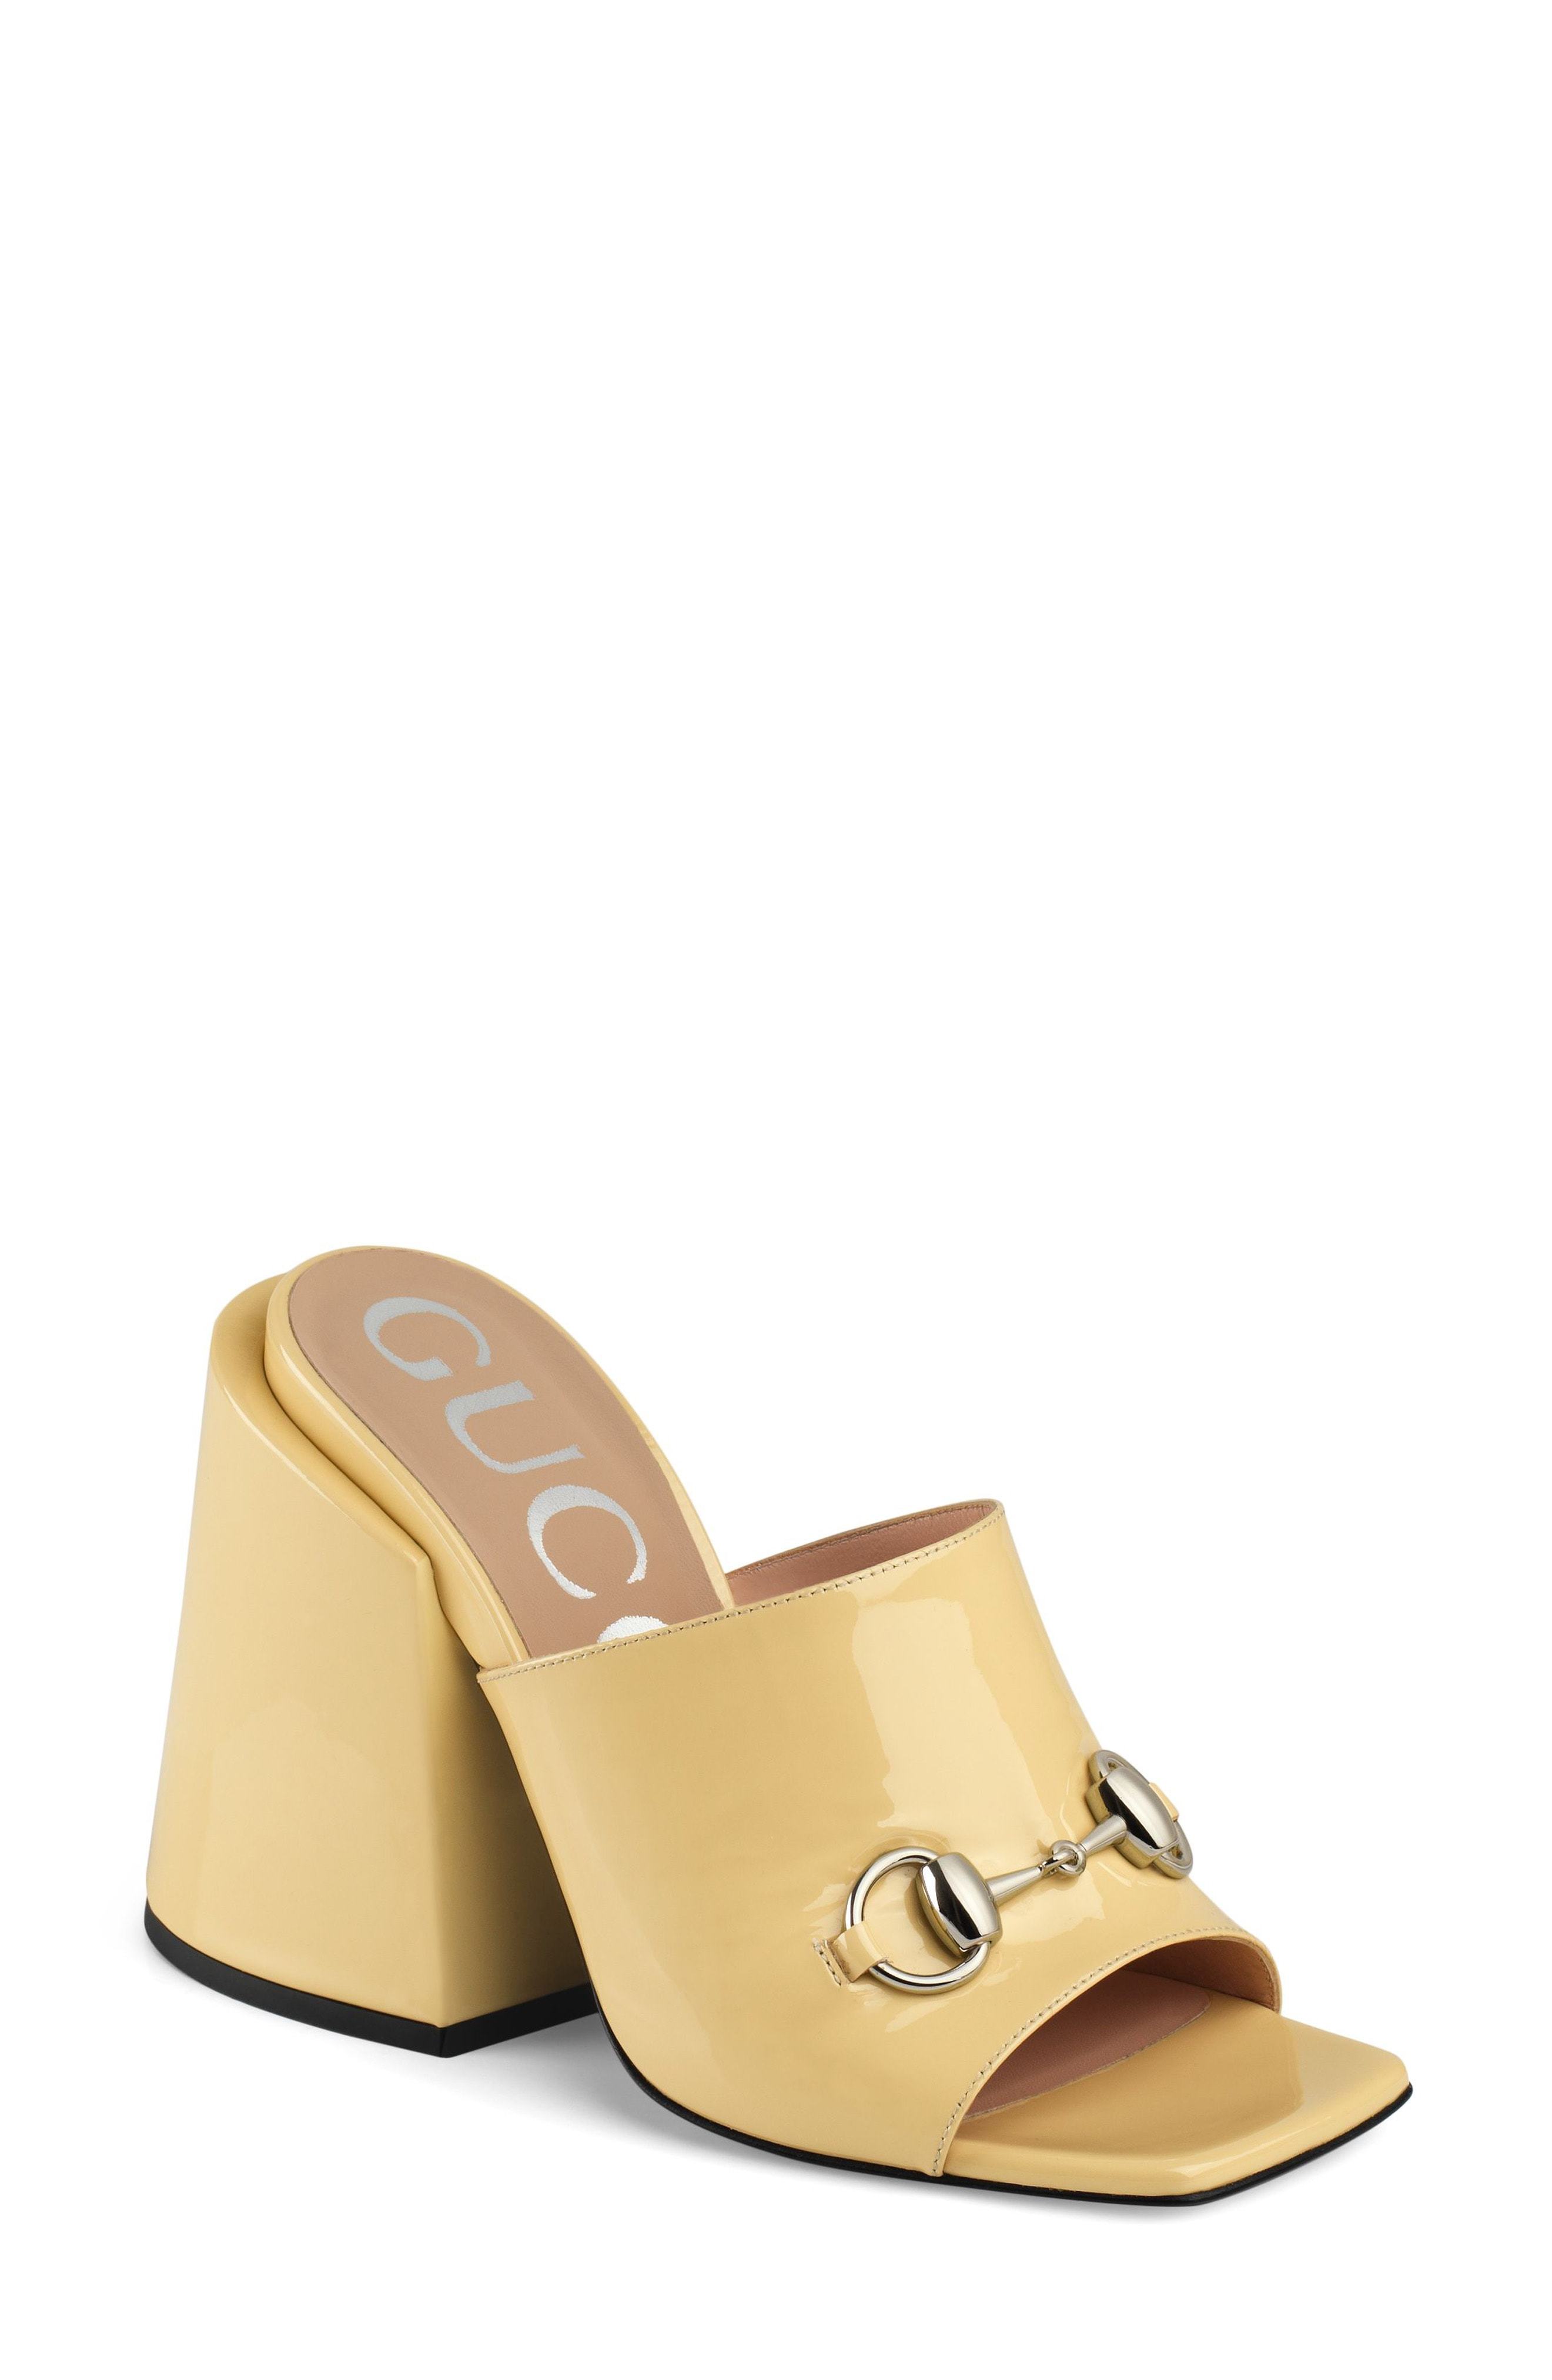 Gucci Lexi Slide Sandal, $890 